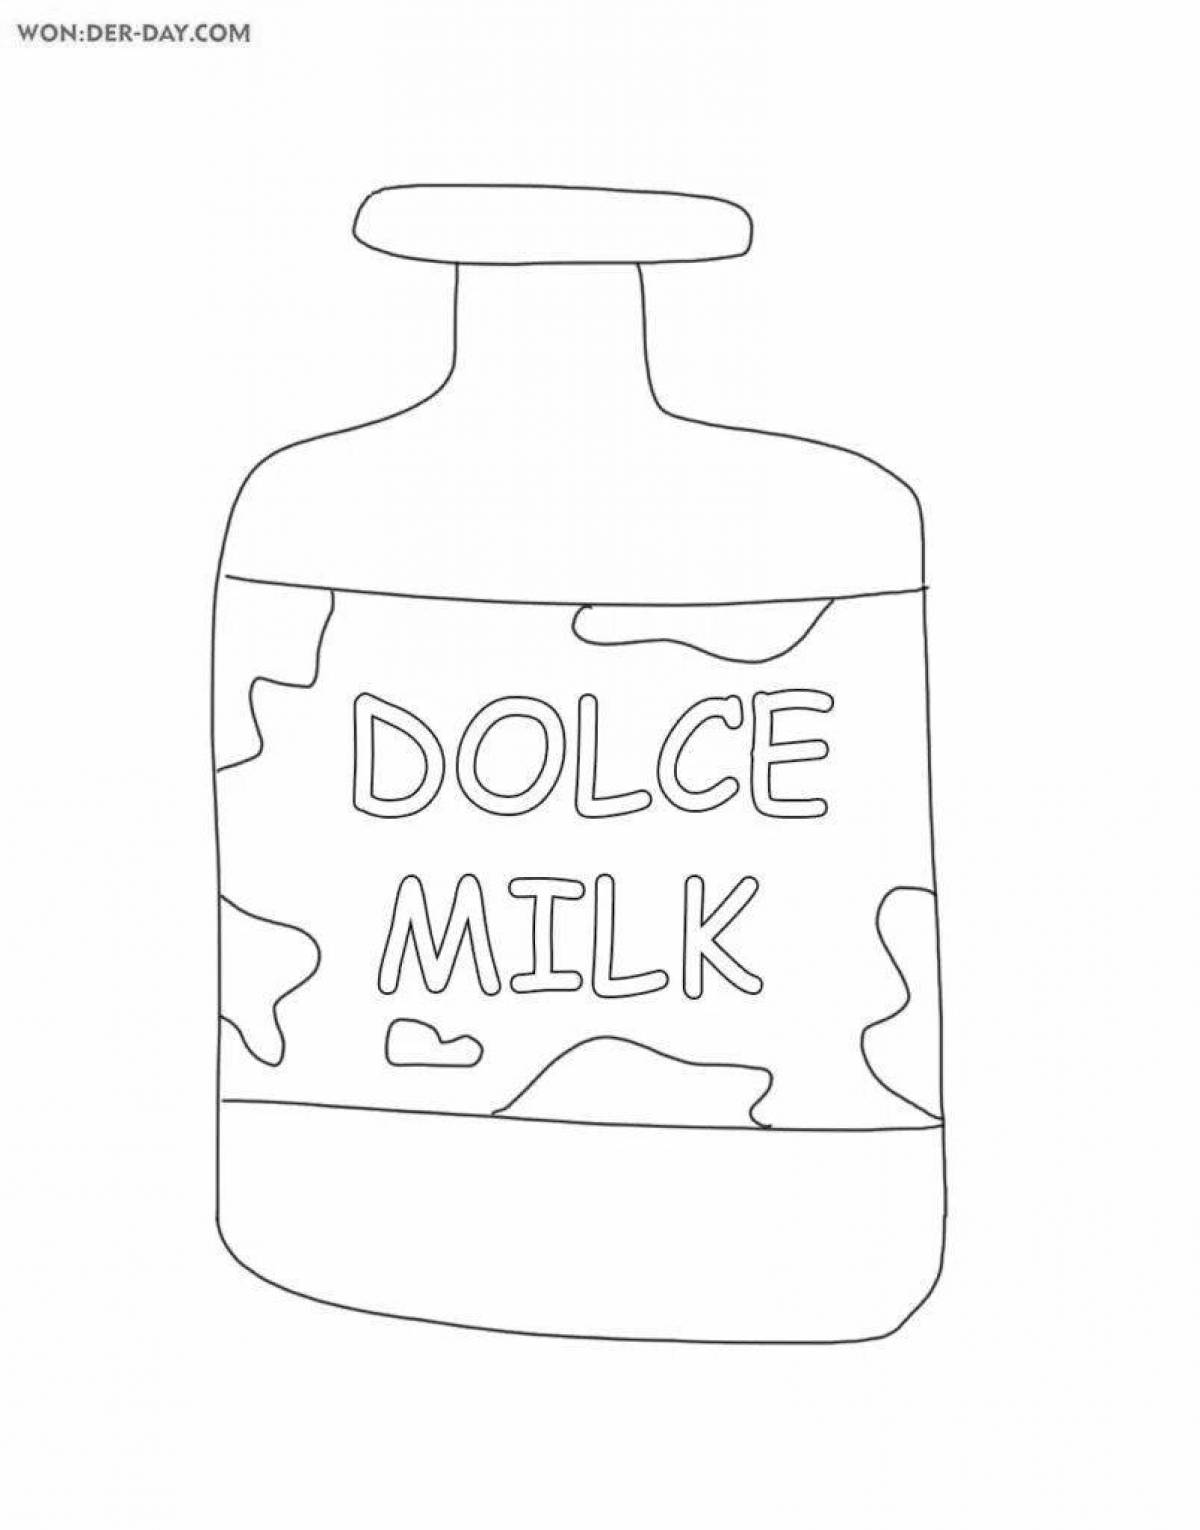 Dolce magic milk coloring